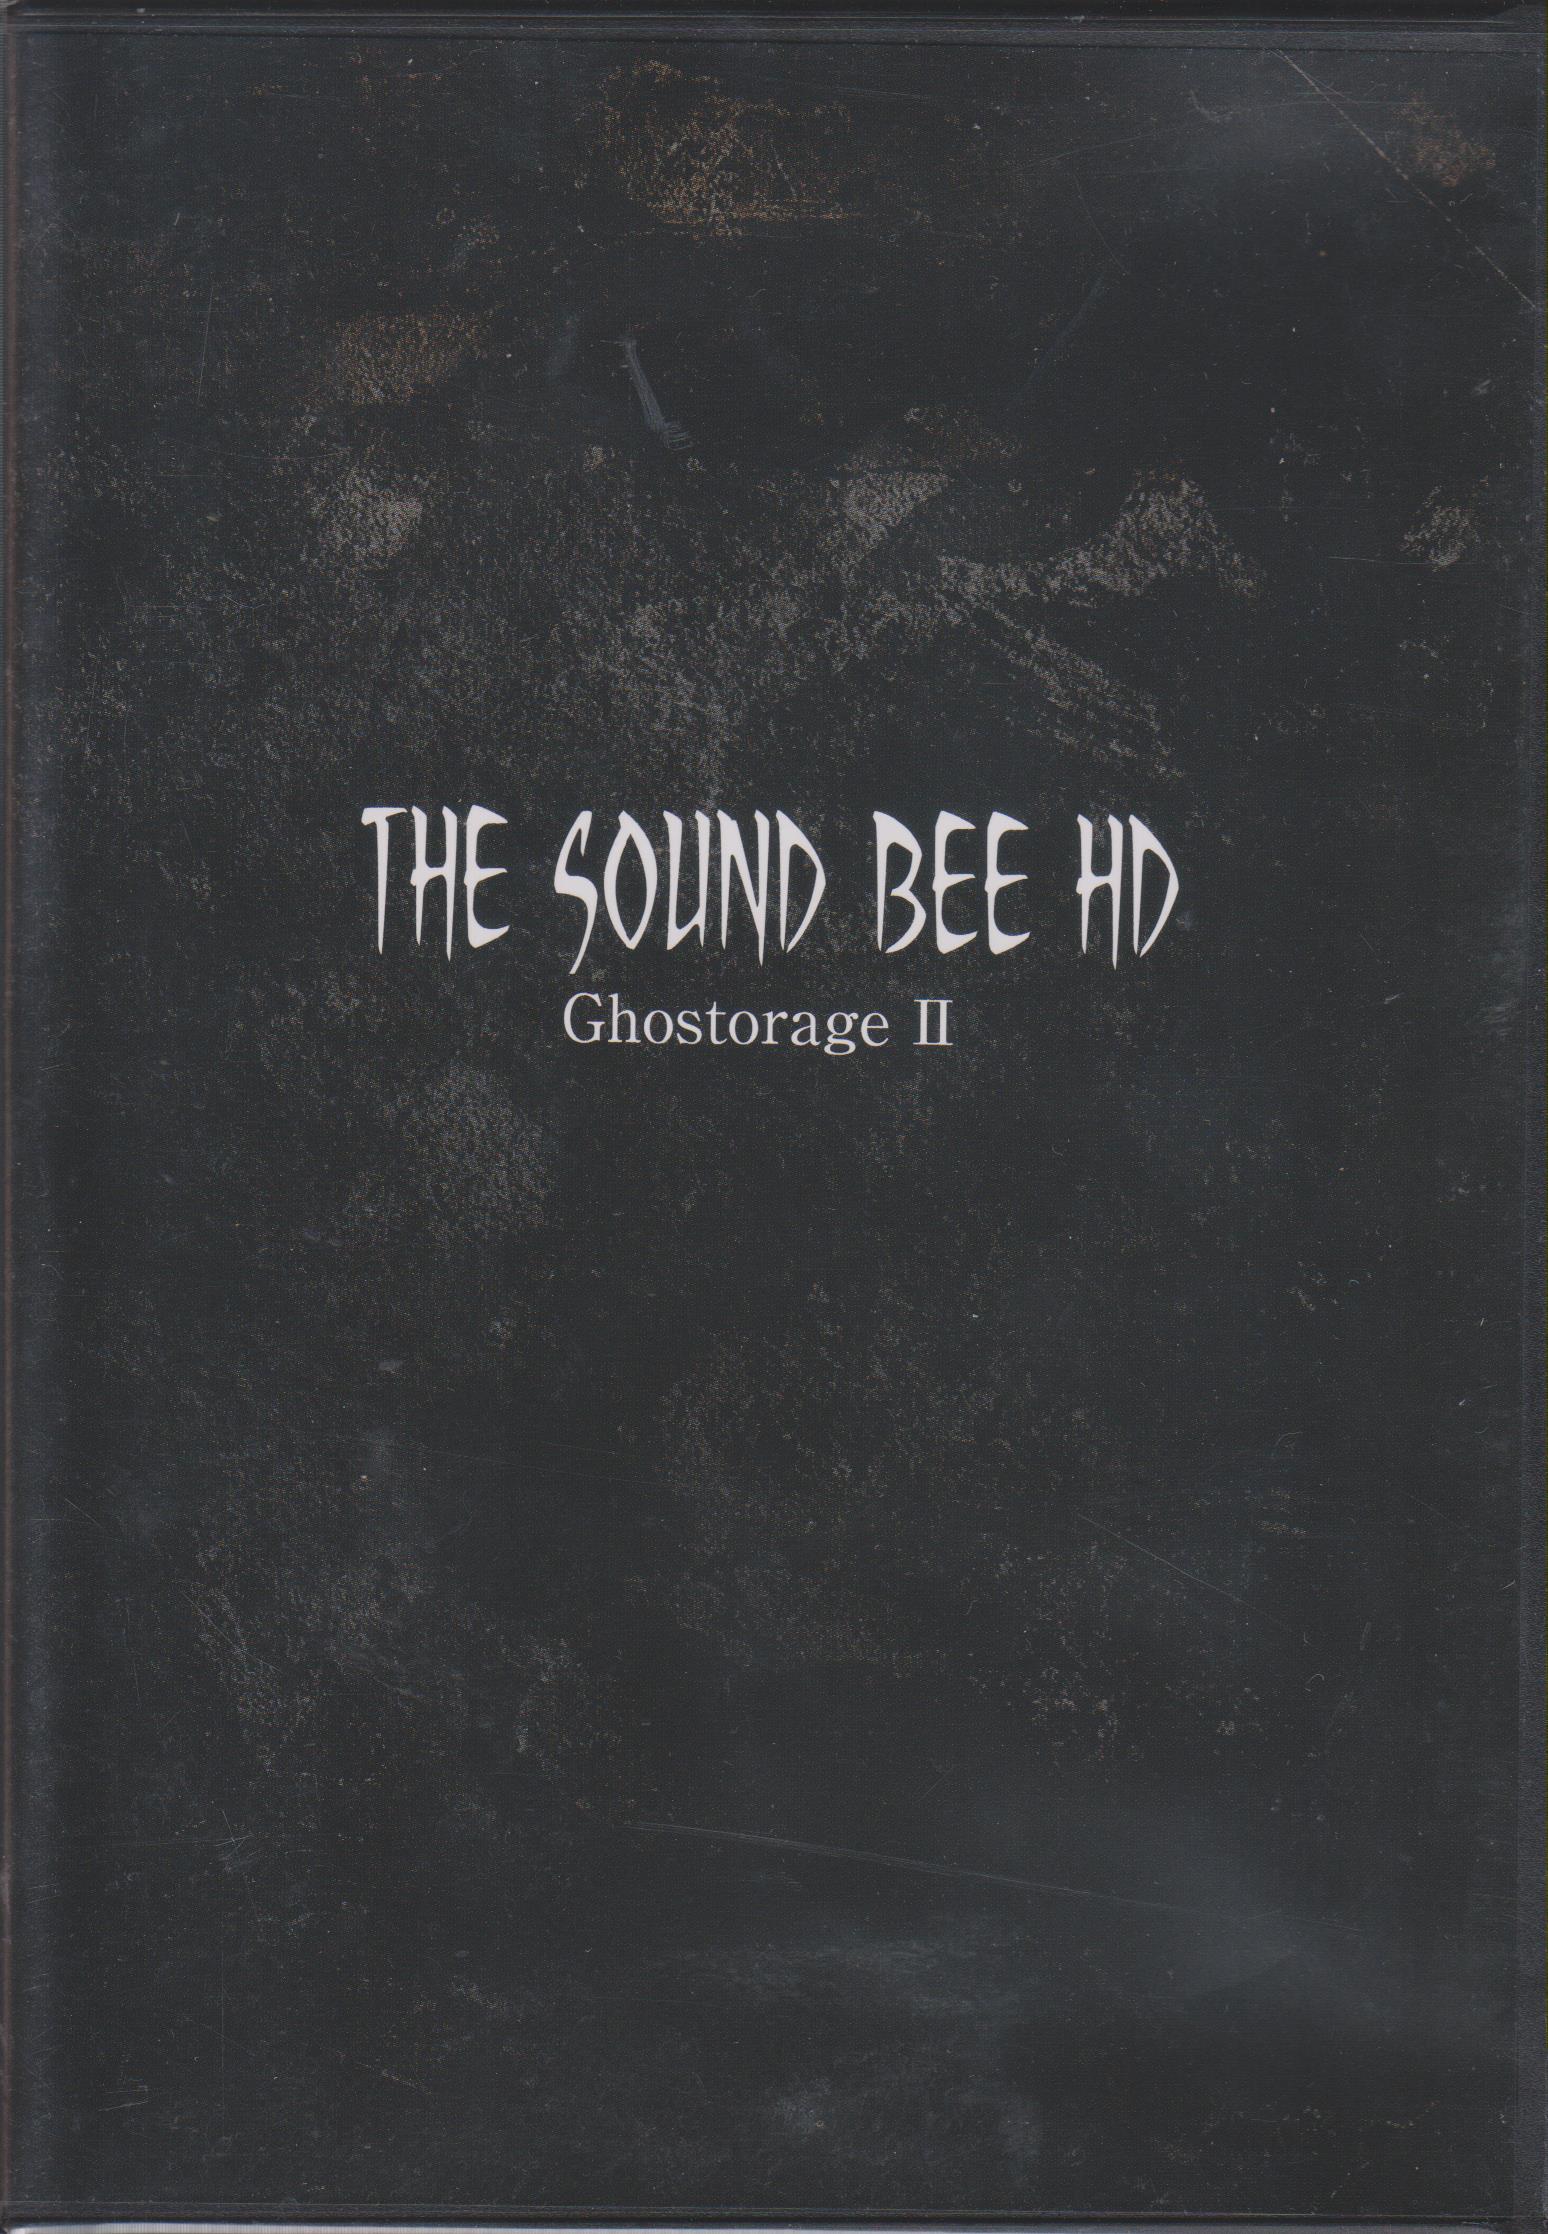 THE SOUND BEE HD ( ザサウンドビーエイチディー )  の DVD Ghostorage Ⅱライブ会場＆通販限定盤